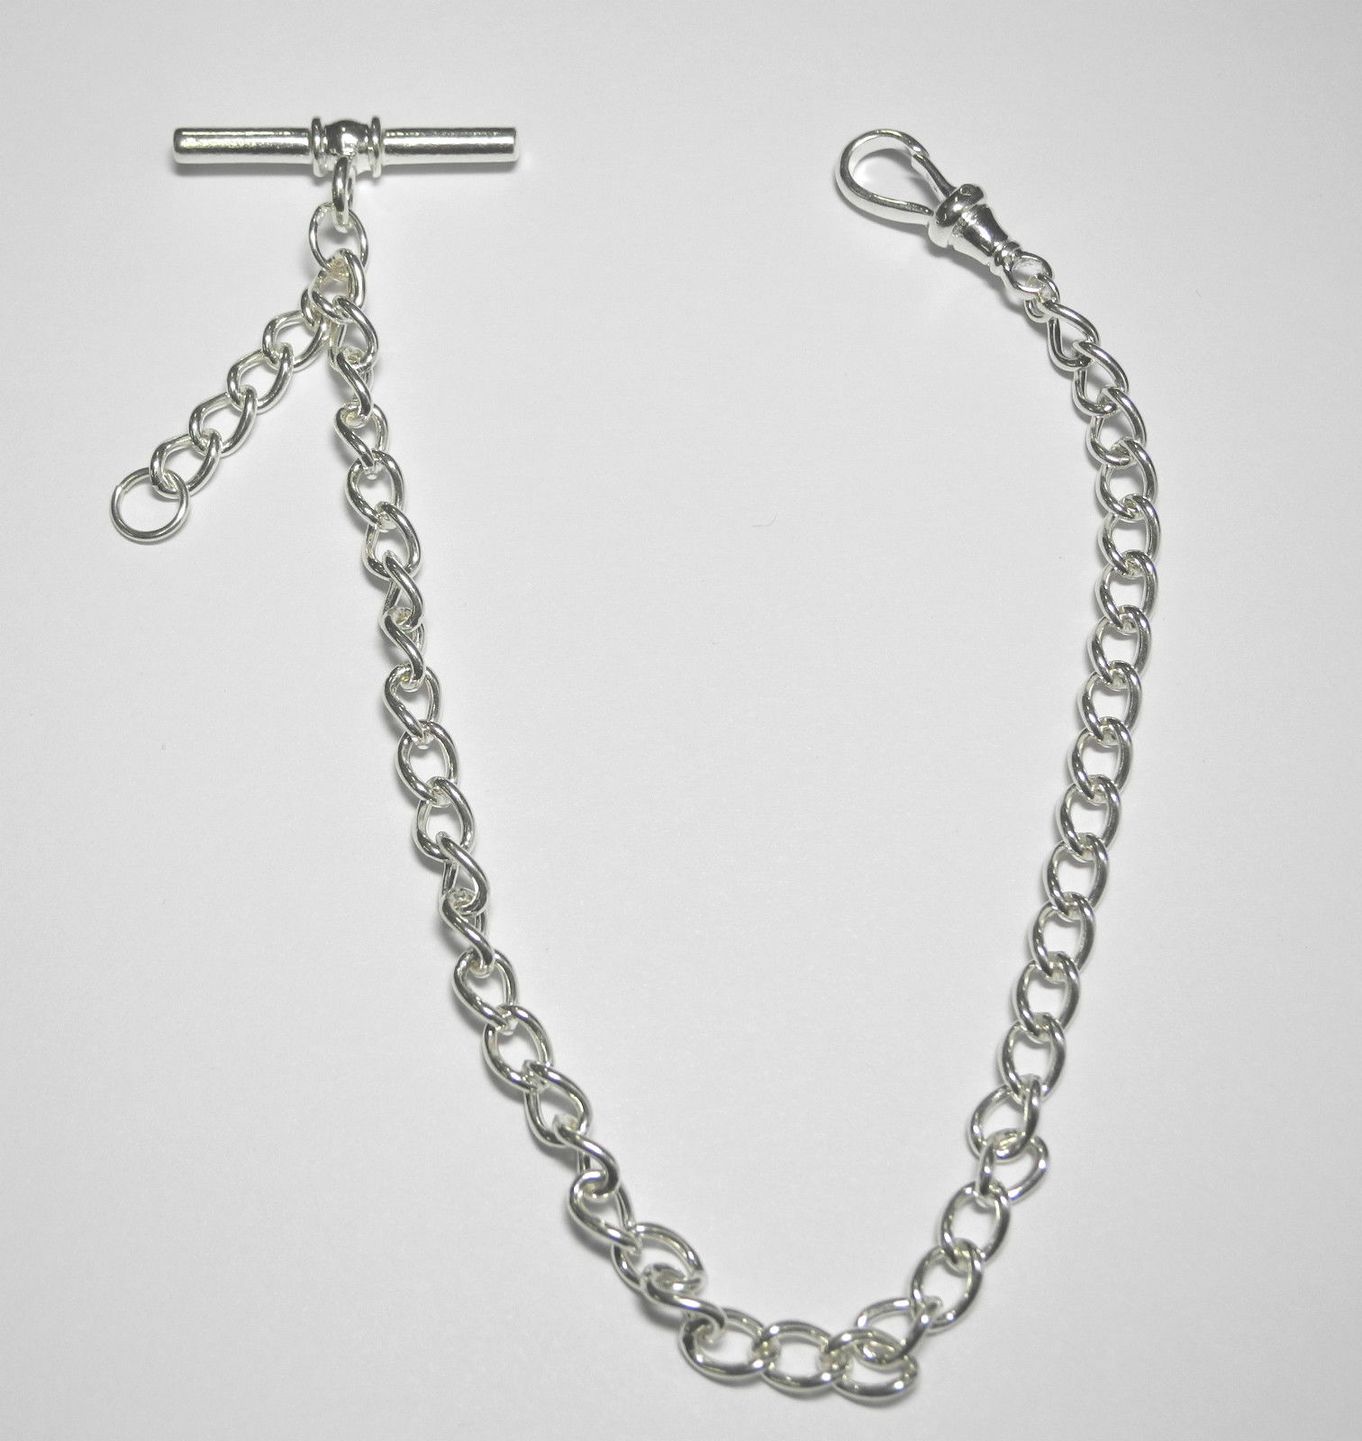 Men's Gentlemen's Classics Curb Chain Necklace